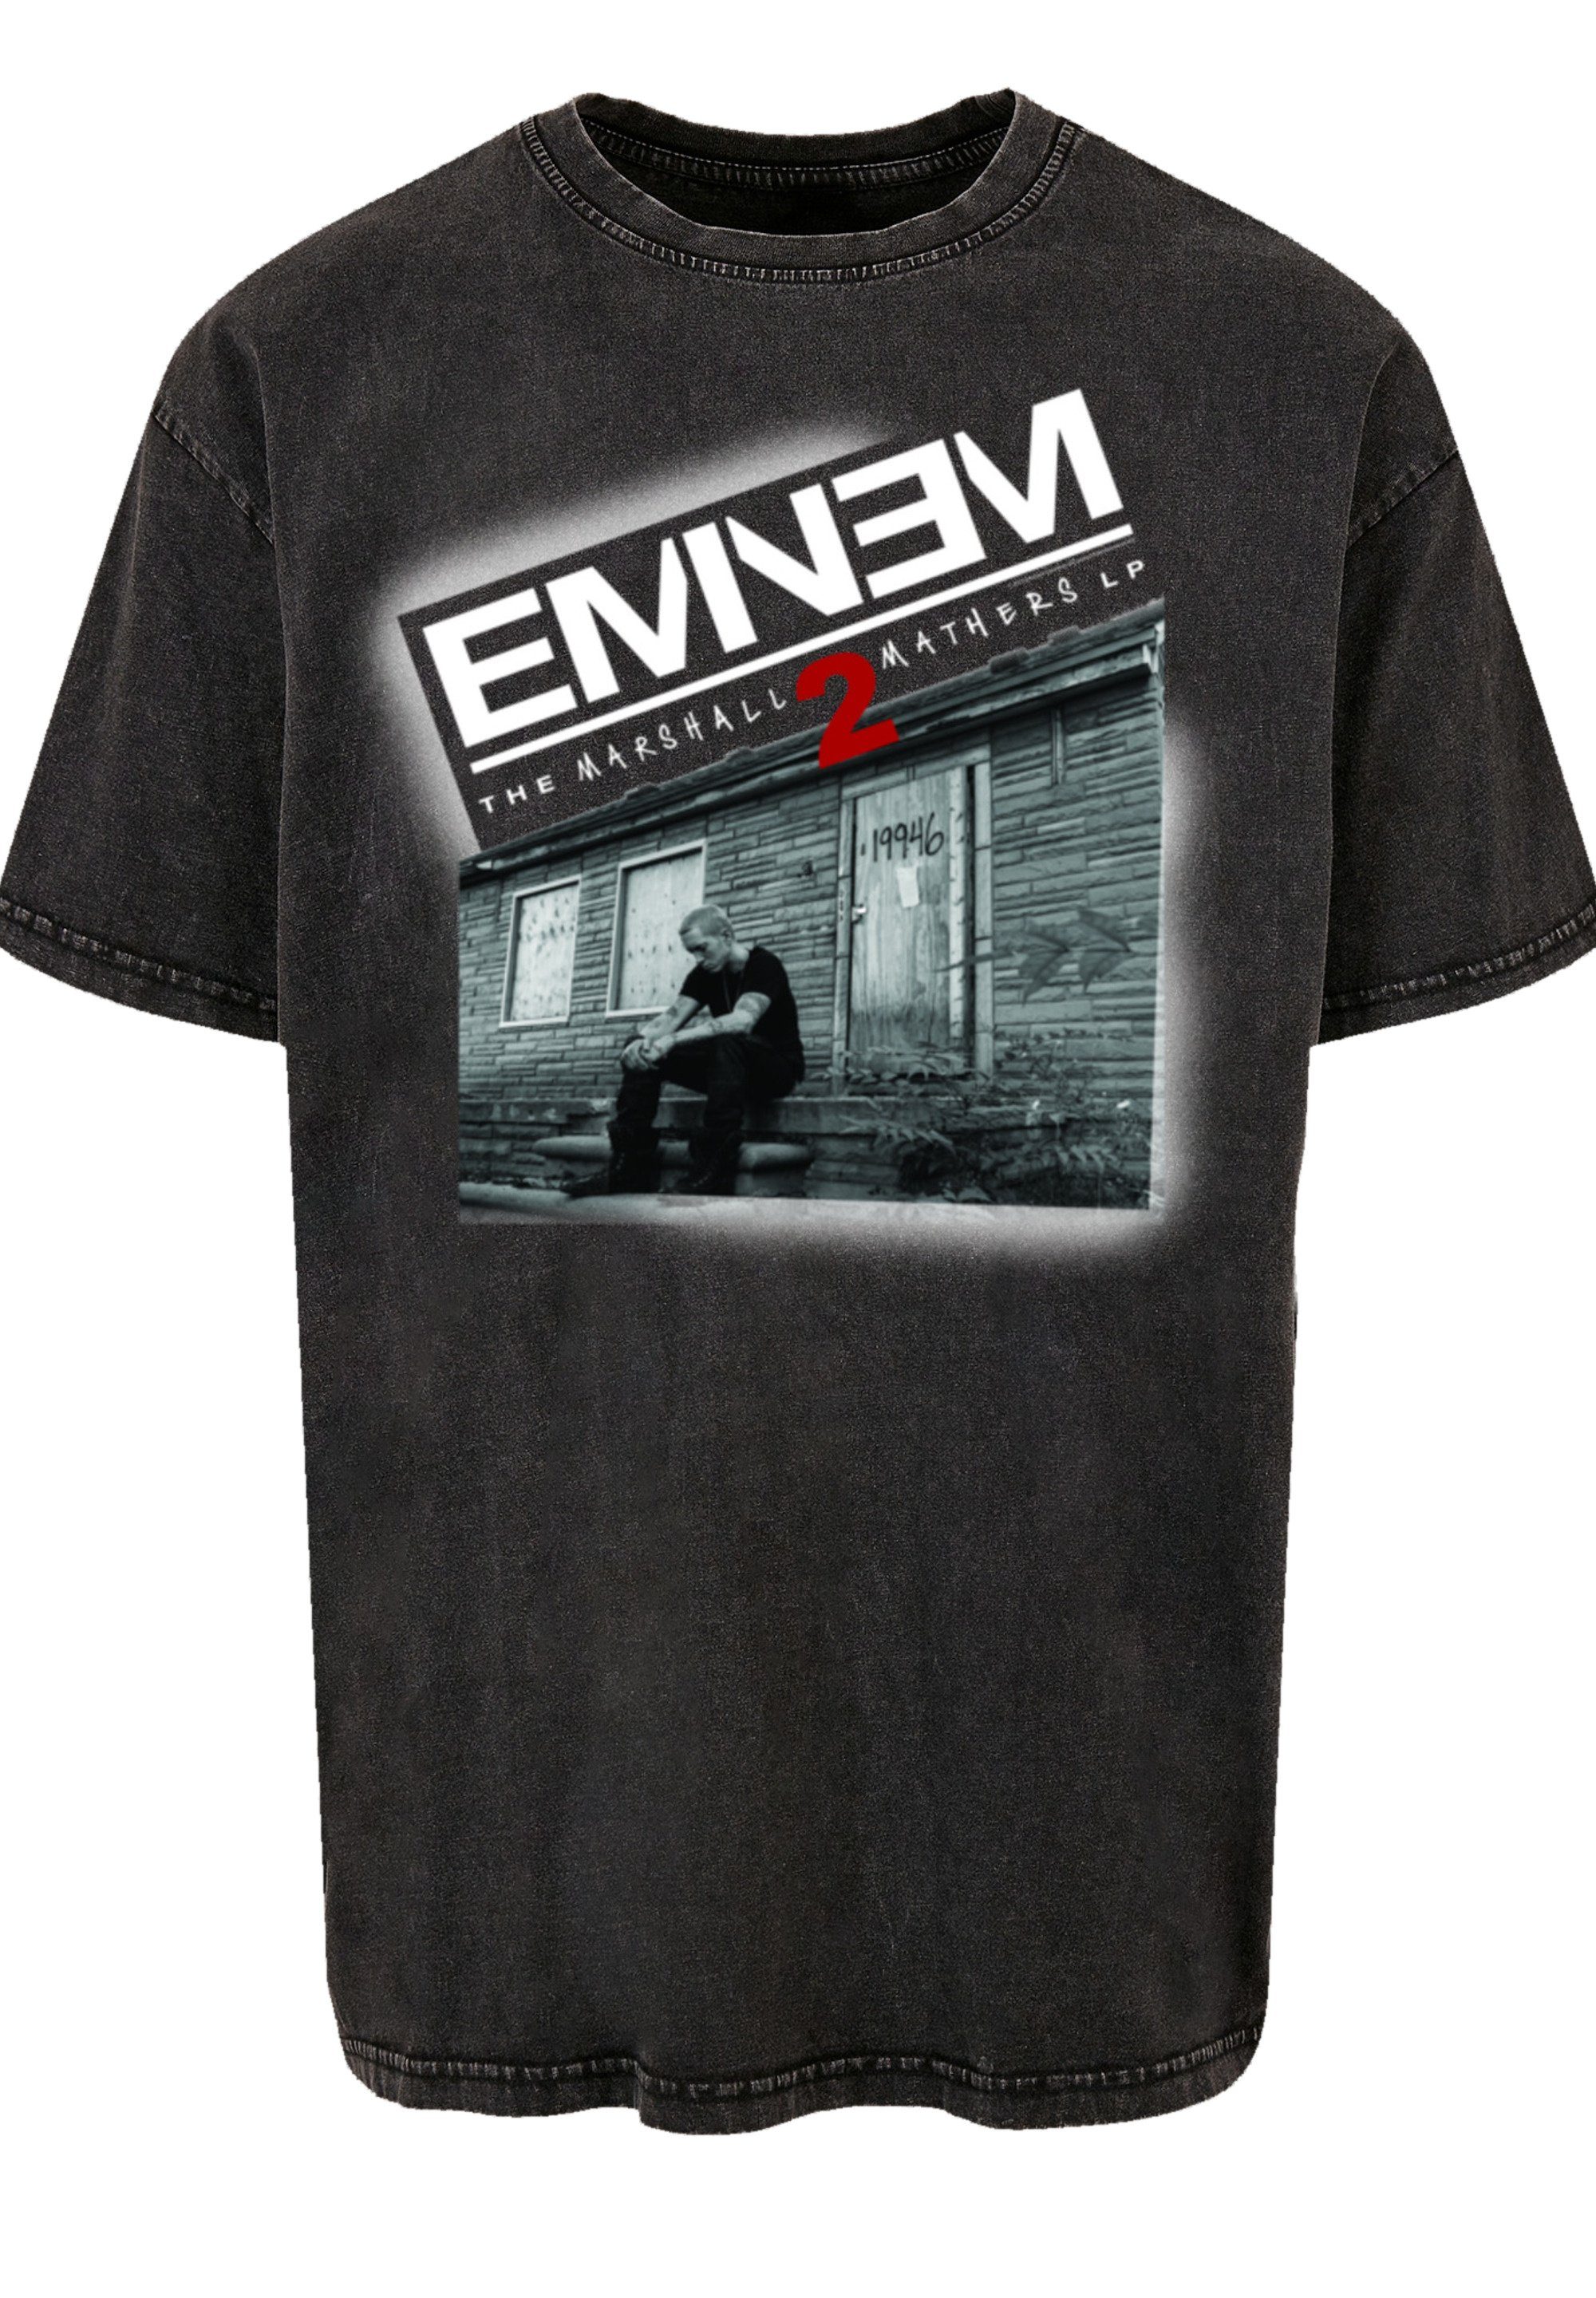 Qualität, 2 Musik Music Premium F4NT4STIC schwarz Rap Oldschool Mathers Marshall Eminem T-Shirt